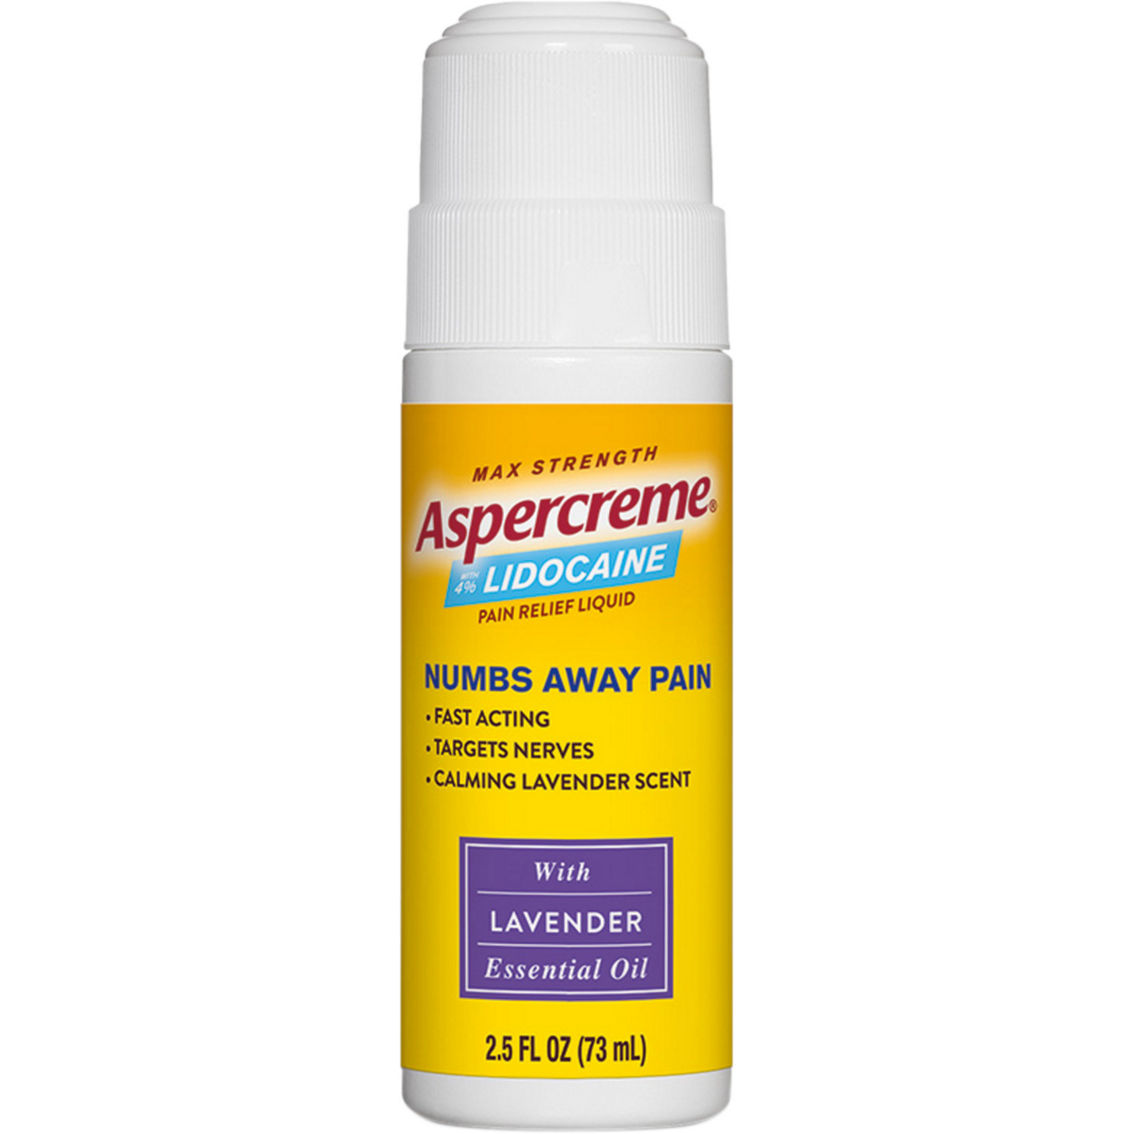 Aspercreme with Lidocaine No Mess Applicator and Lavender Essential Oils 2.5 oz. - Image 5 of 6